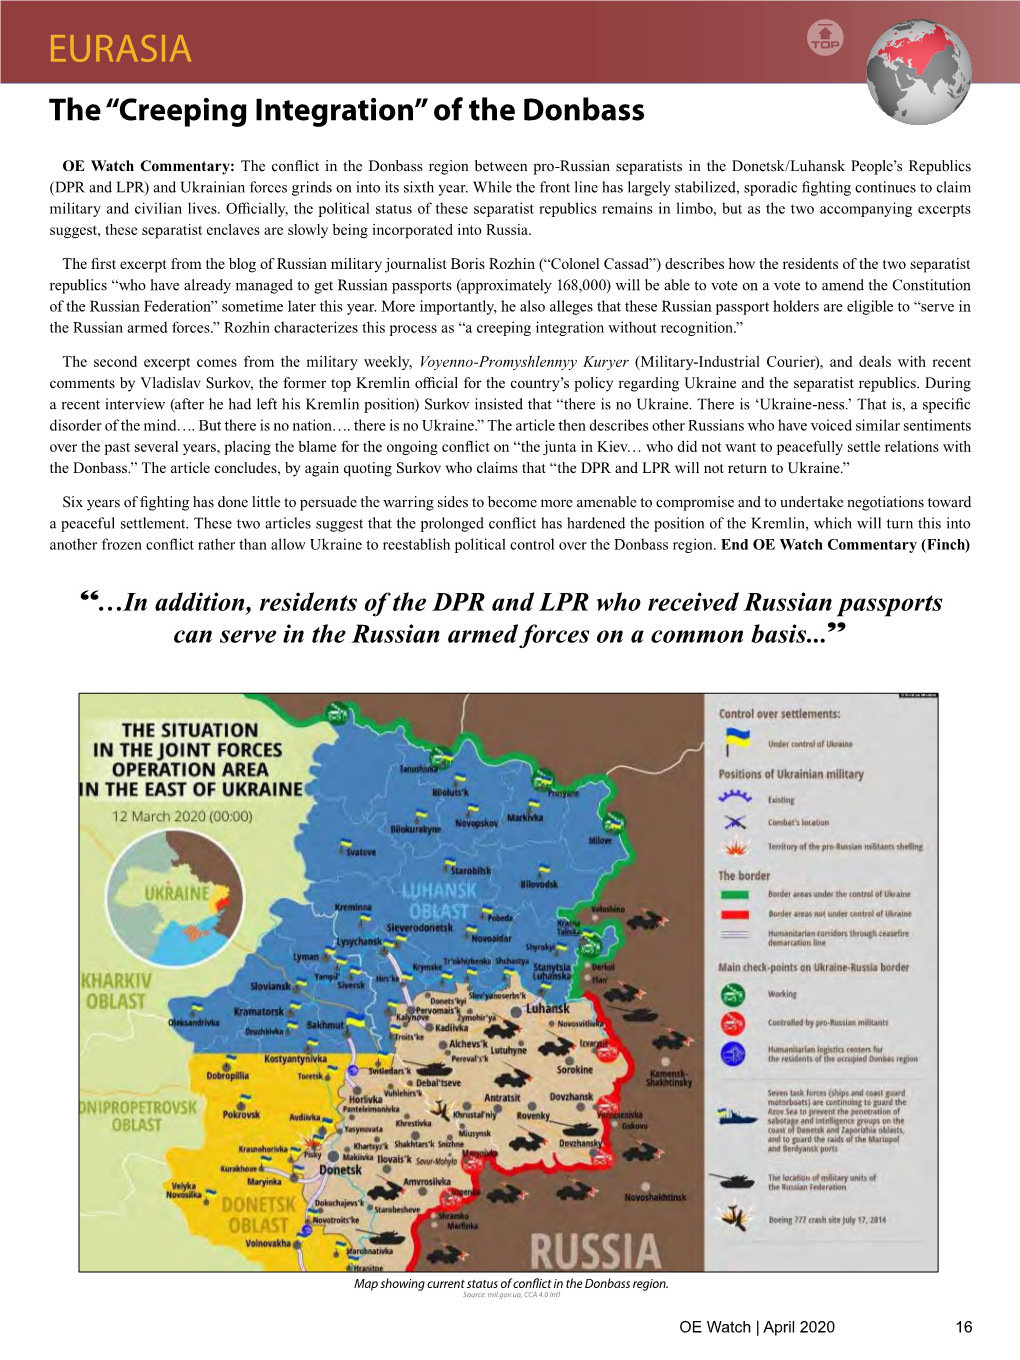 EURASIA the “Creeping Integration” of the Donbass